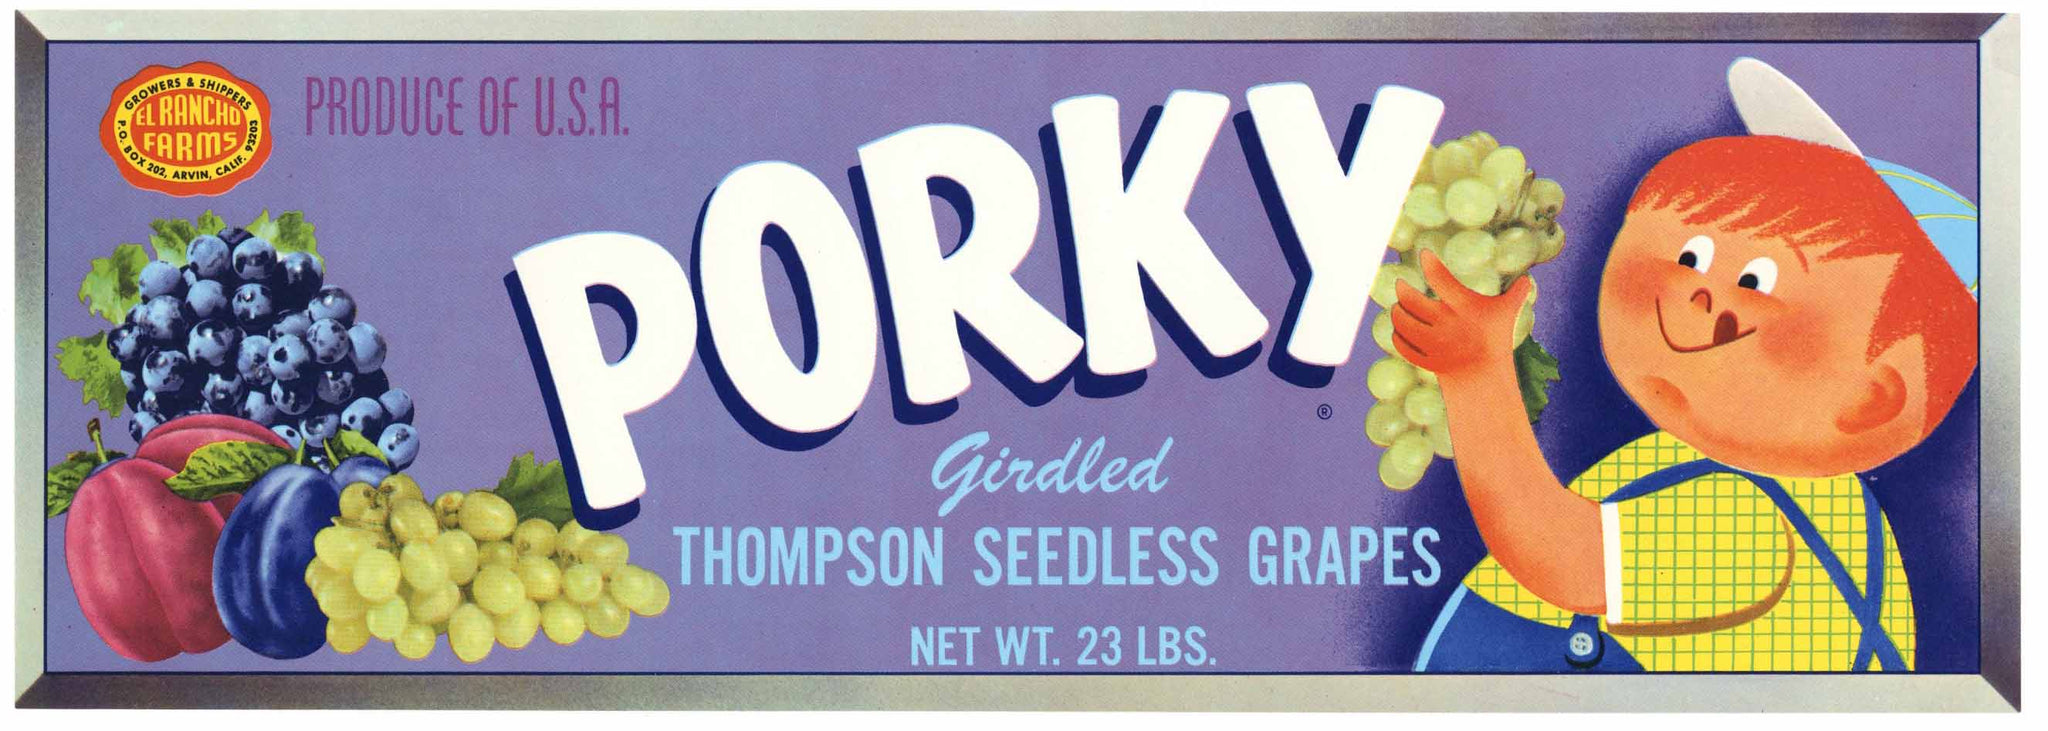 Porky Brand Vintage Arvin Grape Crate Label